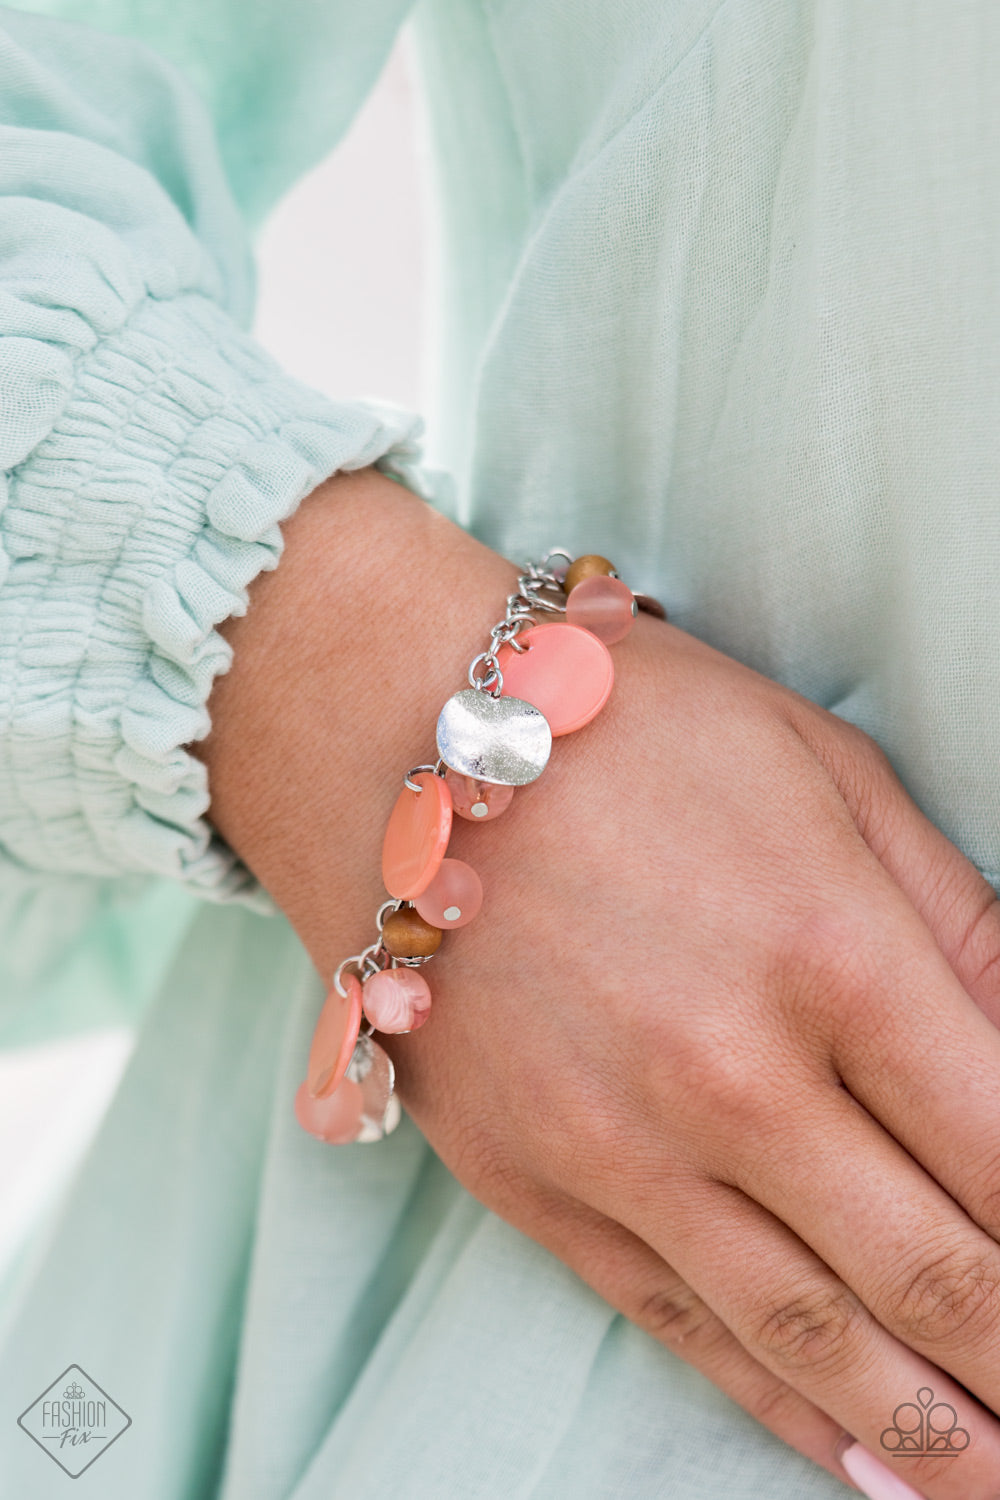 Spring Goddess & Springtime Springs- Orange Necklace Set & Bracelet Combo